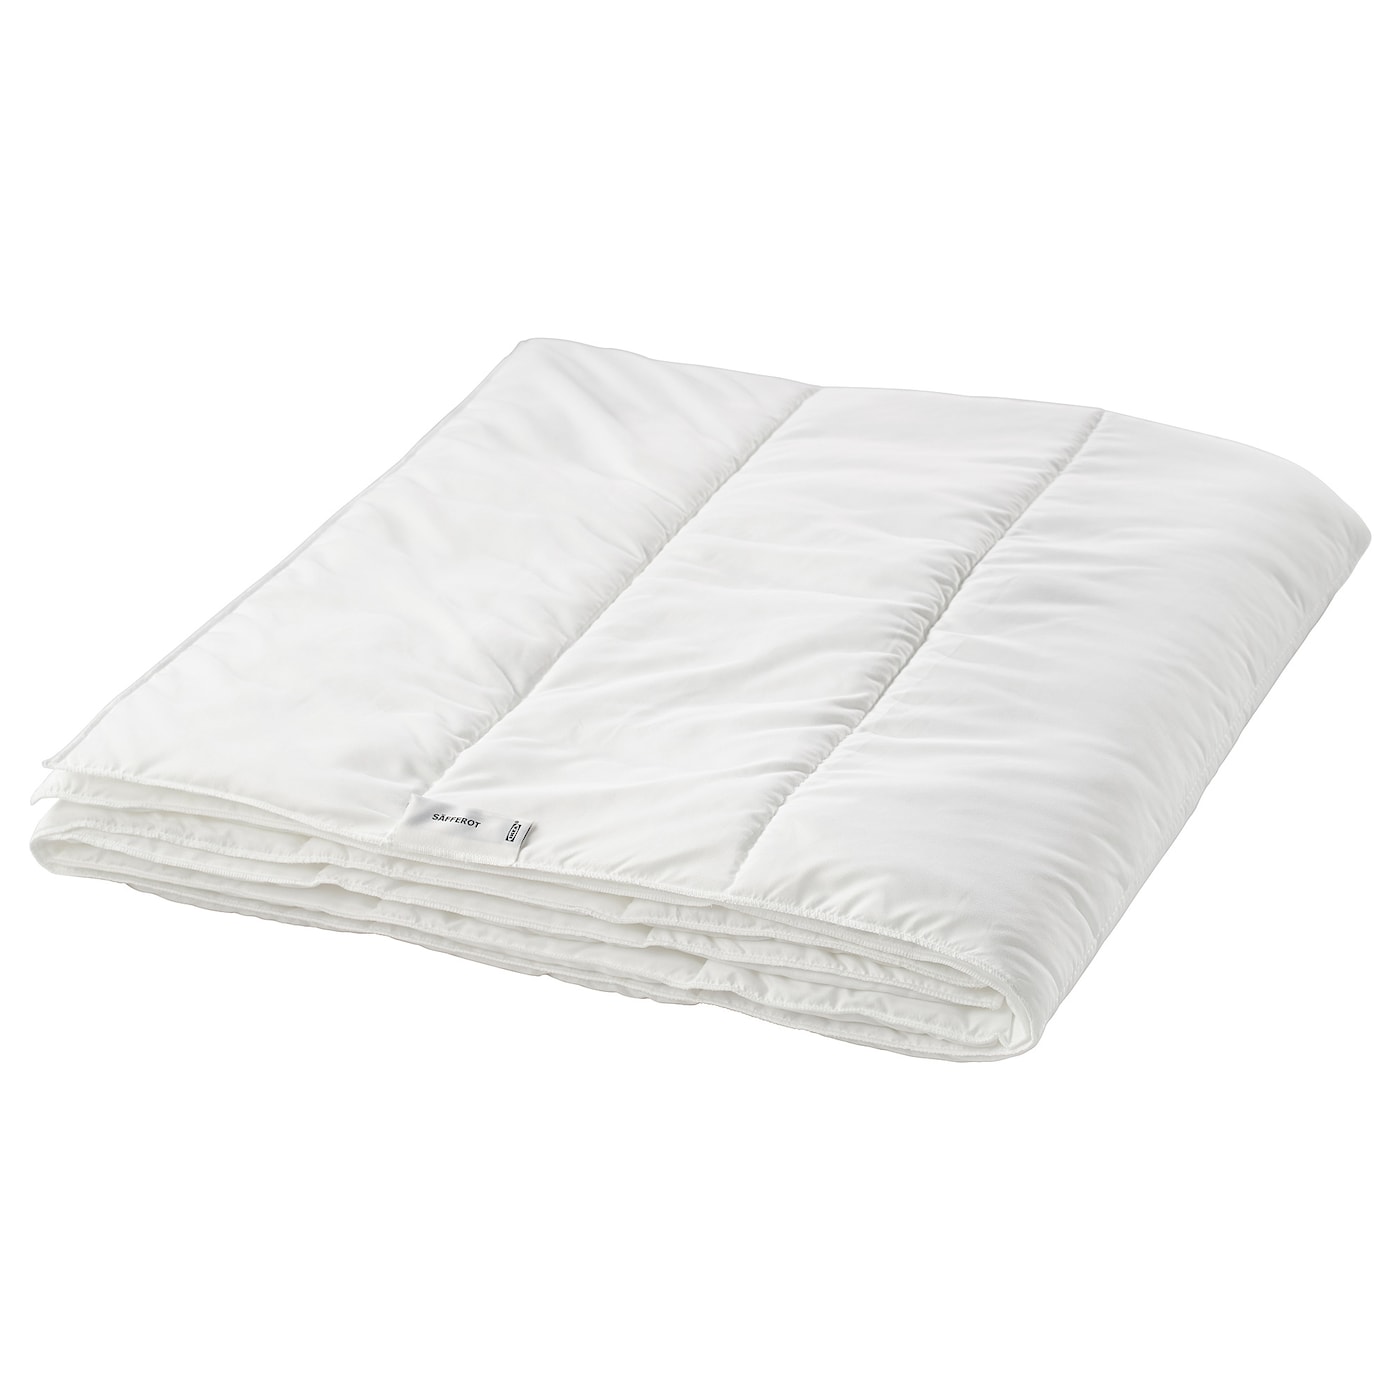 Одеяло - SÄFFEROT / SAFFEROT IKEA/ СЭФФЕРОТ ИКЕА, 200х150 см, белый